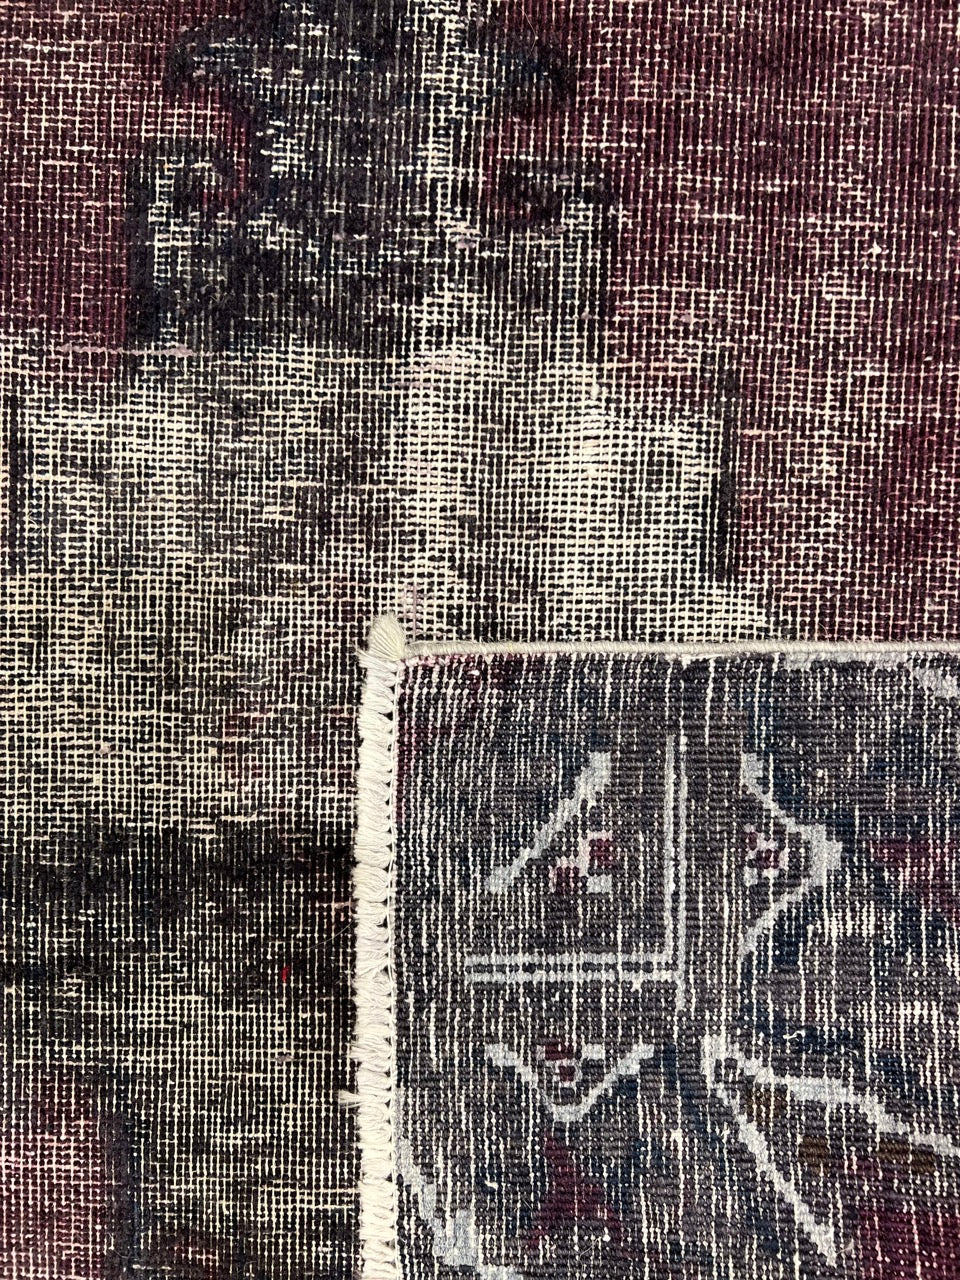 Handmade Square Rug Vintage Black And Burgundy Pakistan Wool Carpet product image #27556022517930